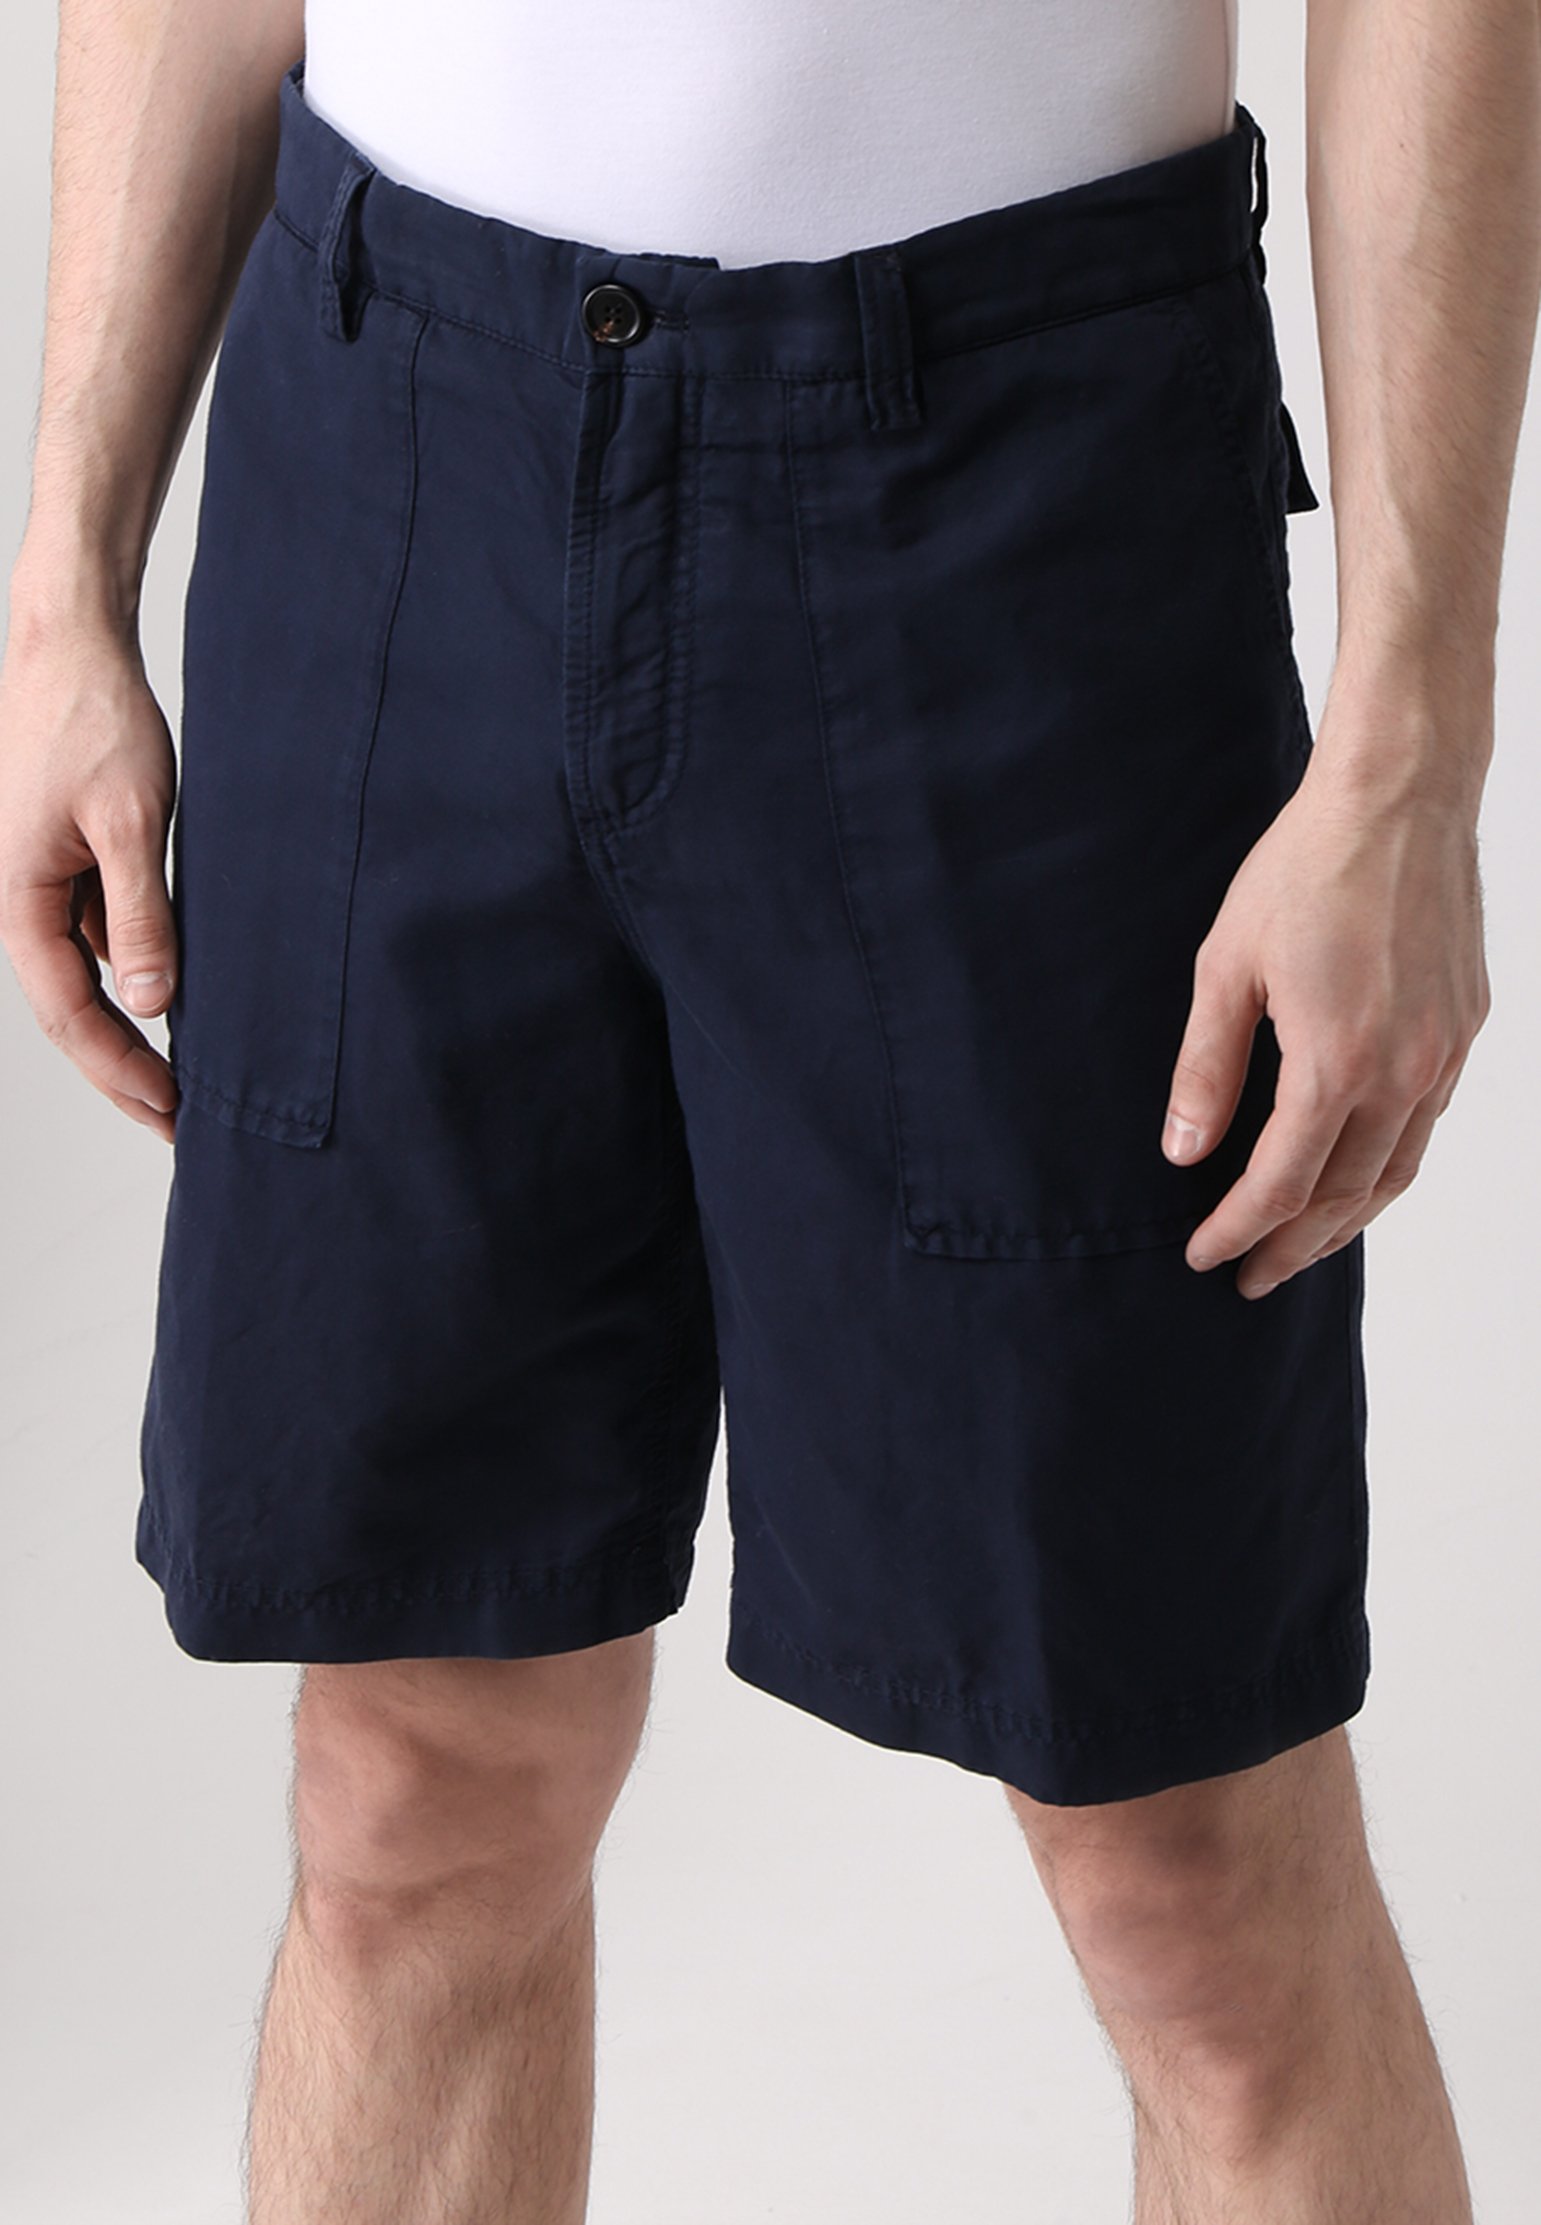 Bermuda shorts BRUNELLO CUCINELLI Color: dark blue (Code: 173) in online store Allure